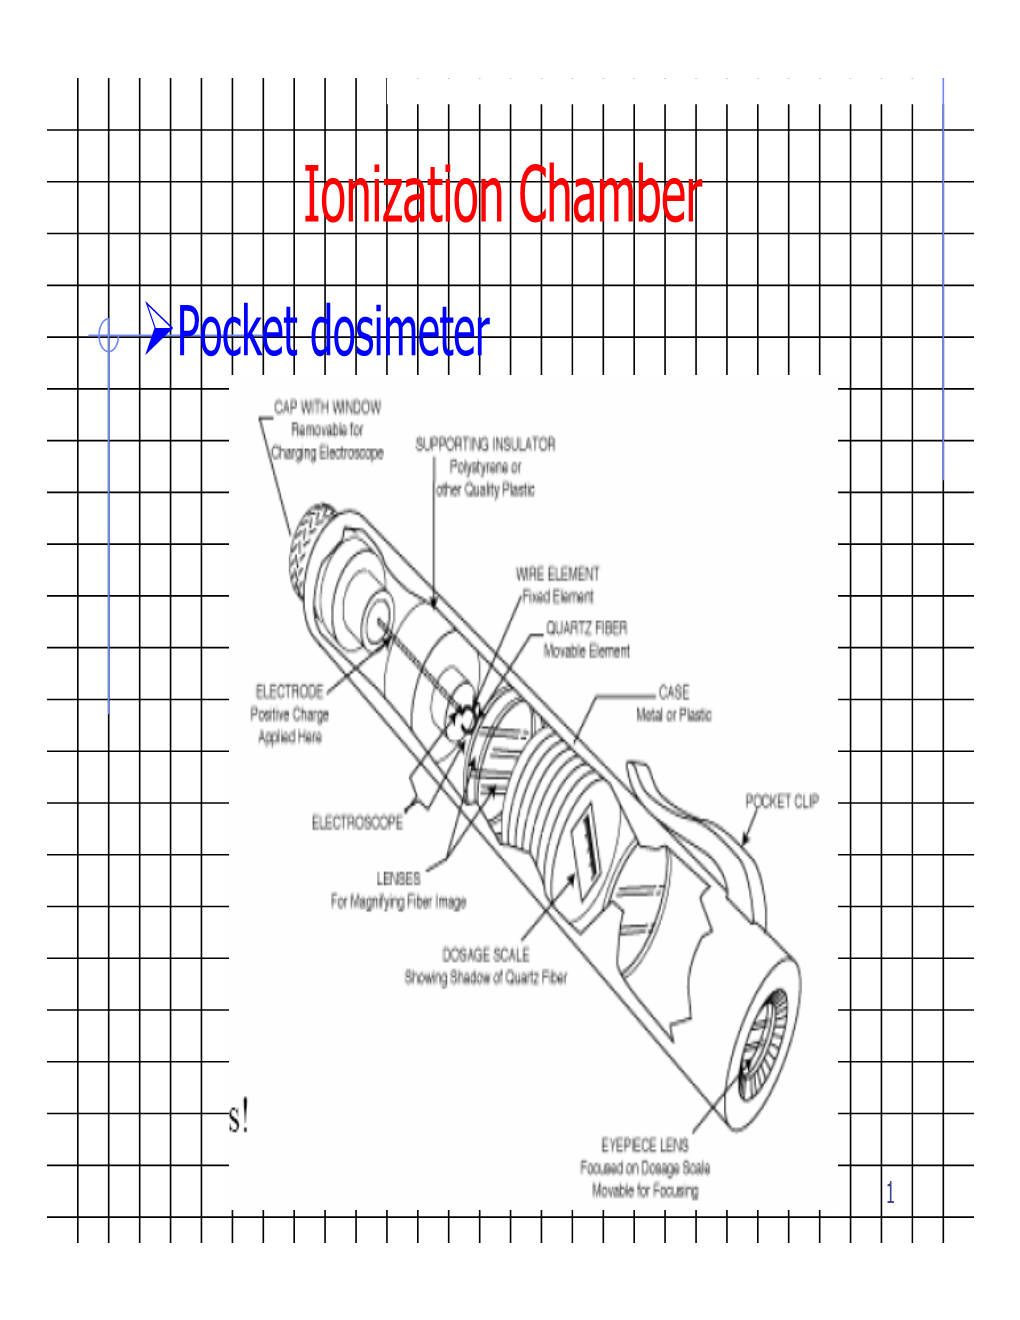 Ionization Chamber ¾Pocket Dosimeter